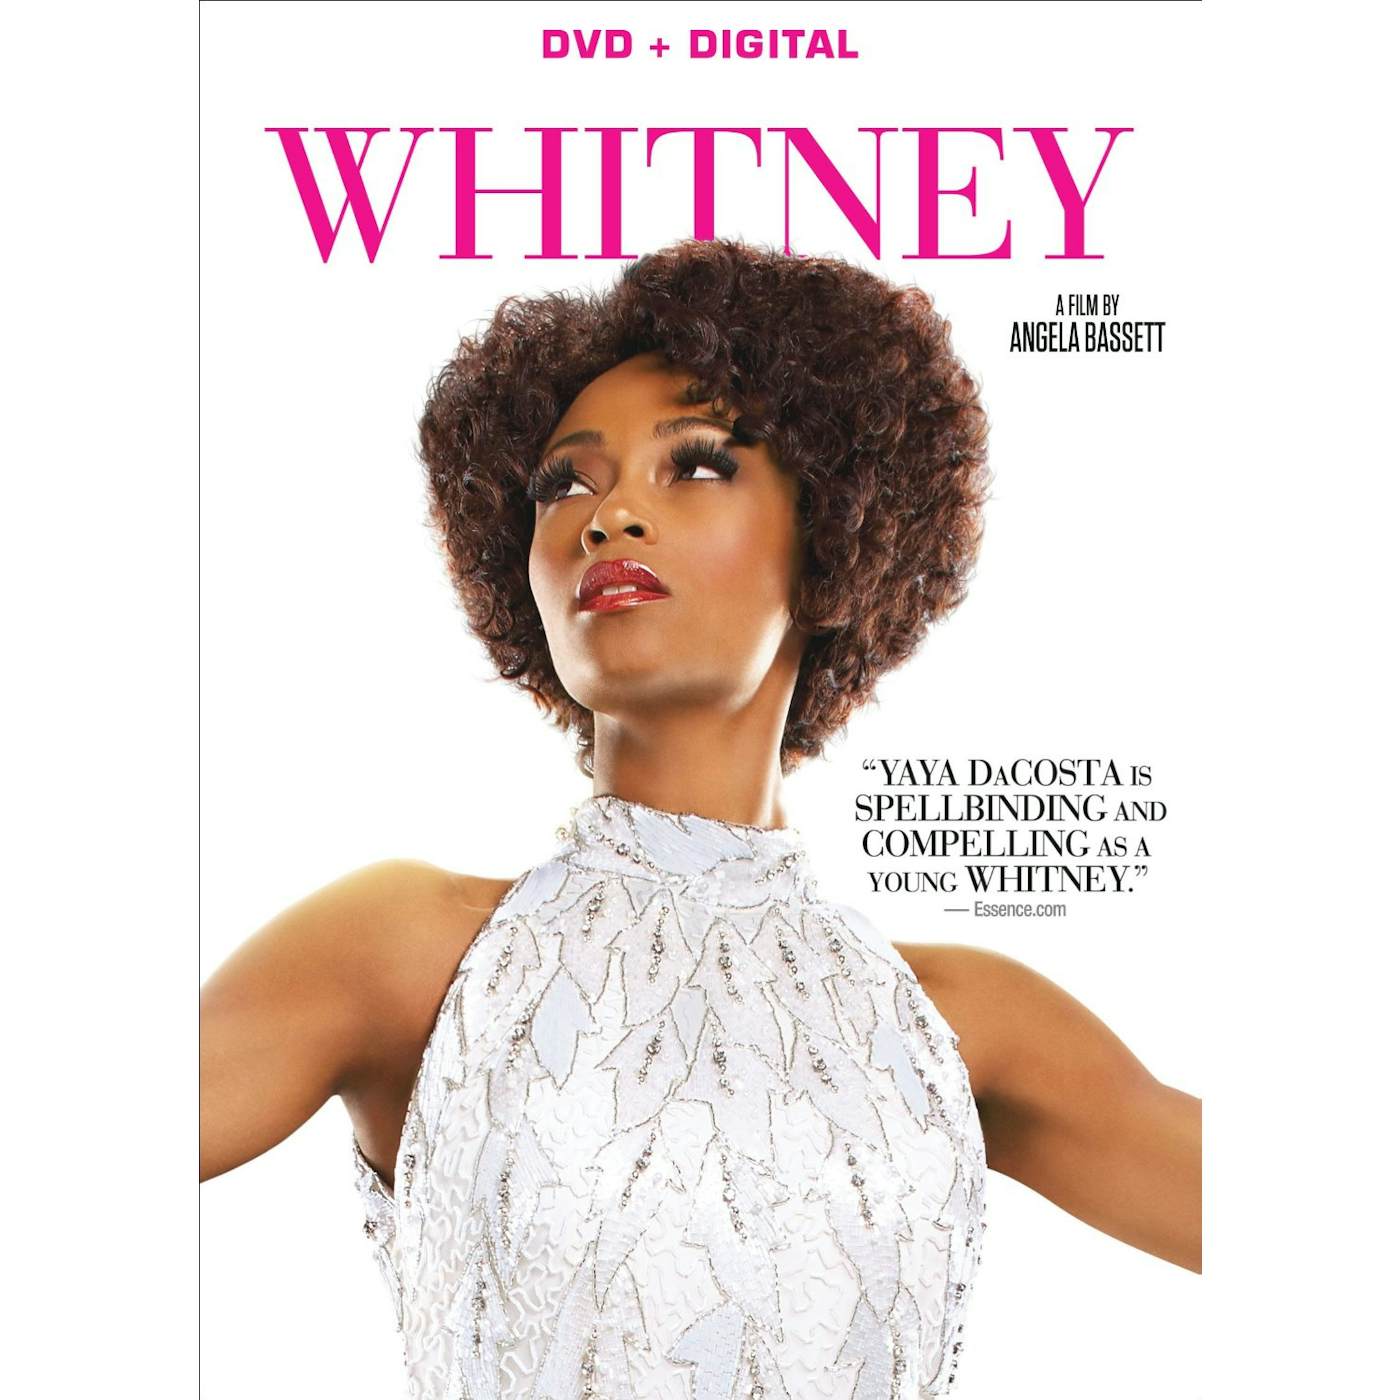 WHITNEY (LIFETIME) DVD